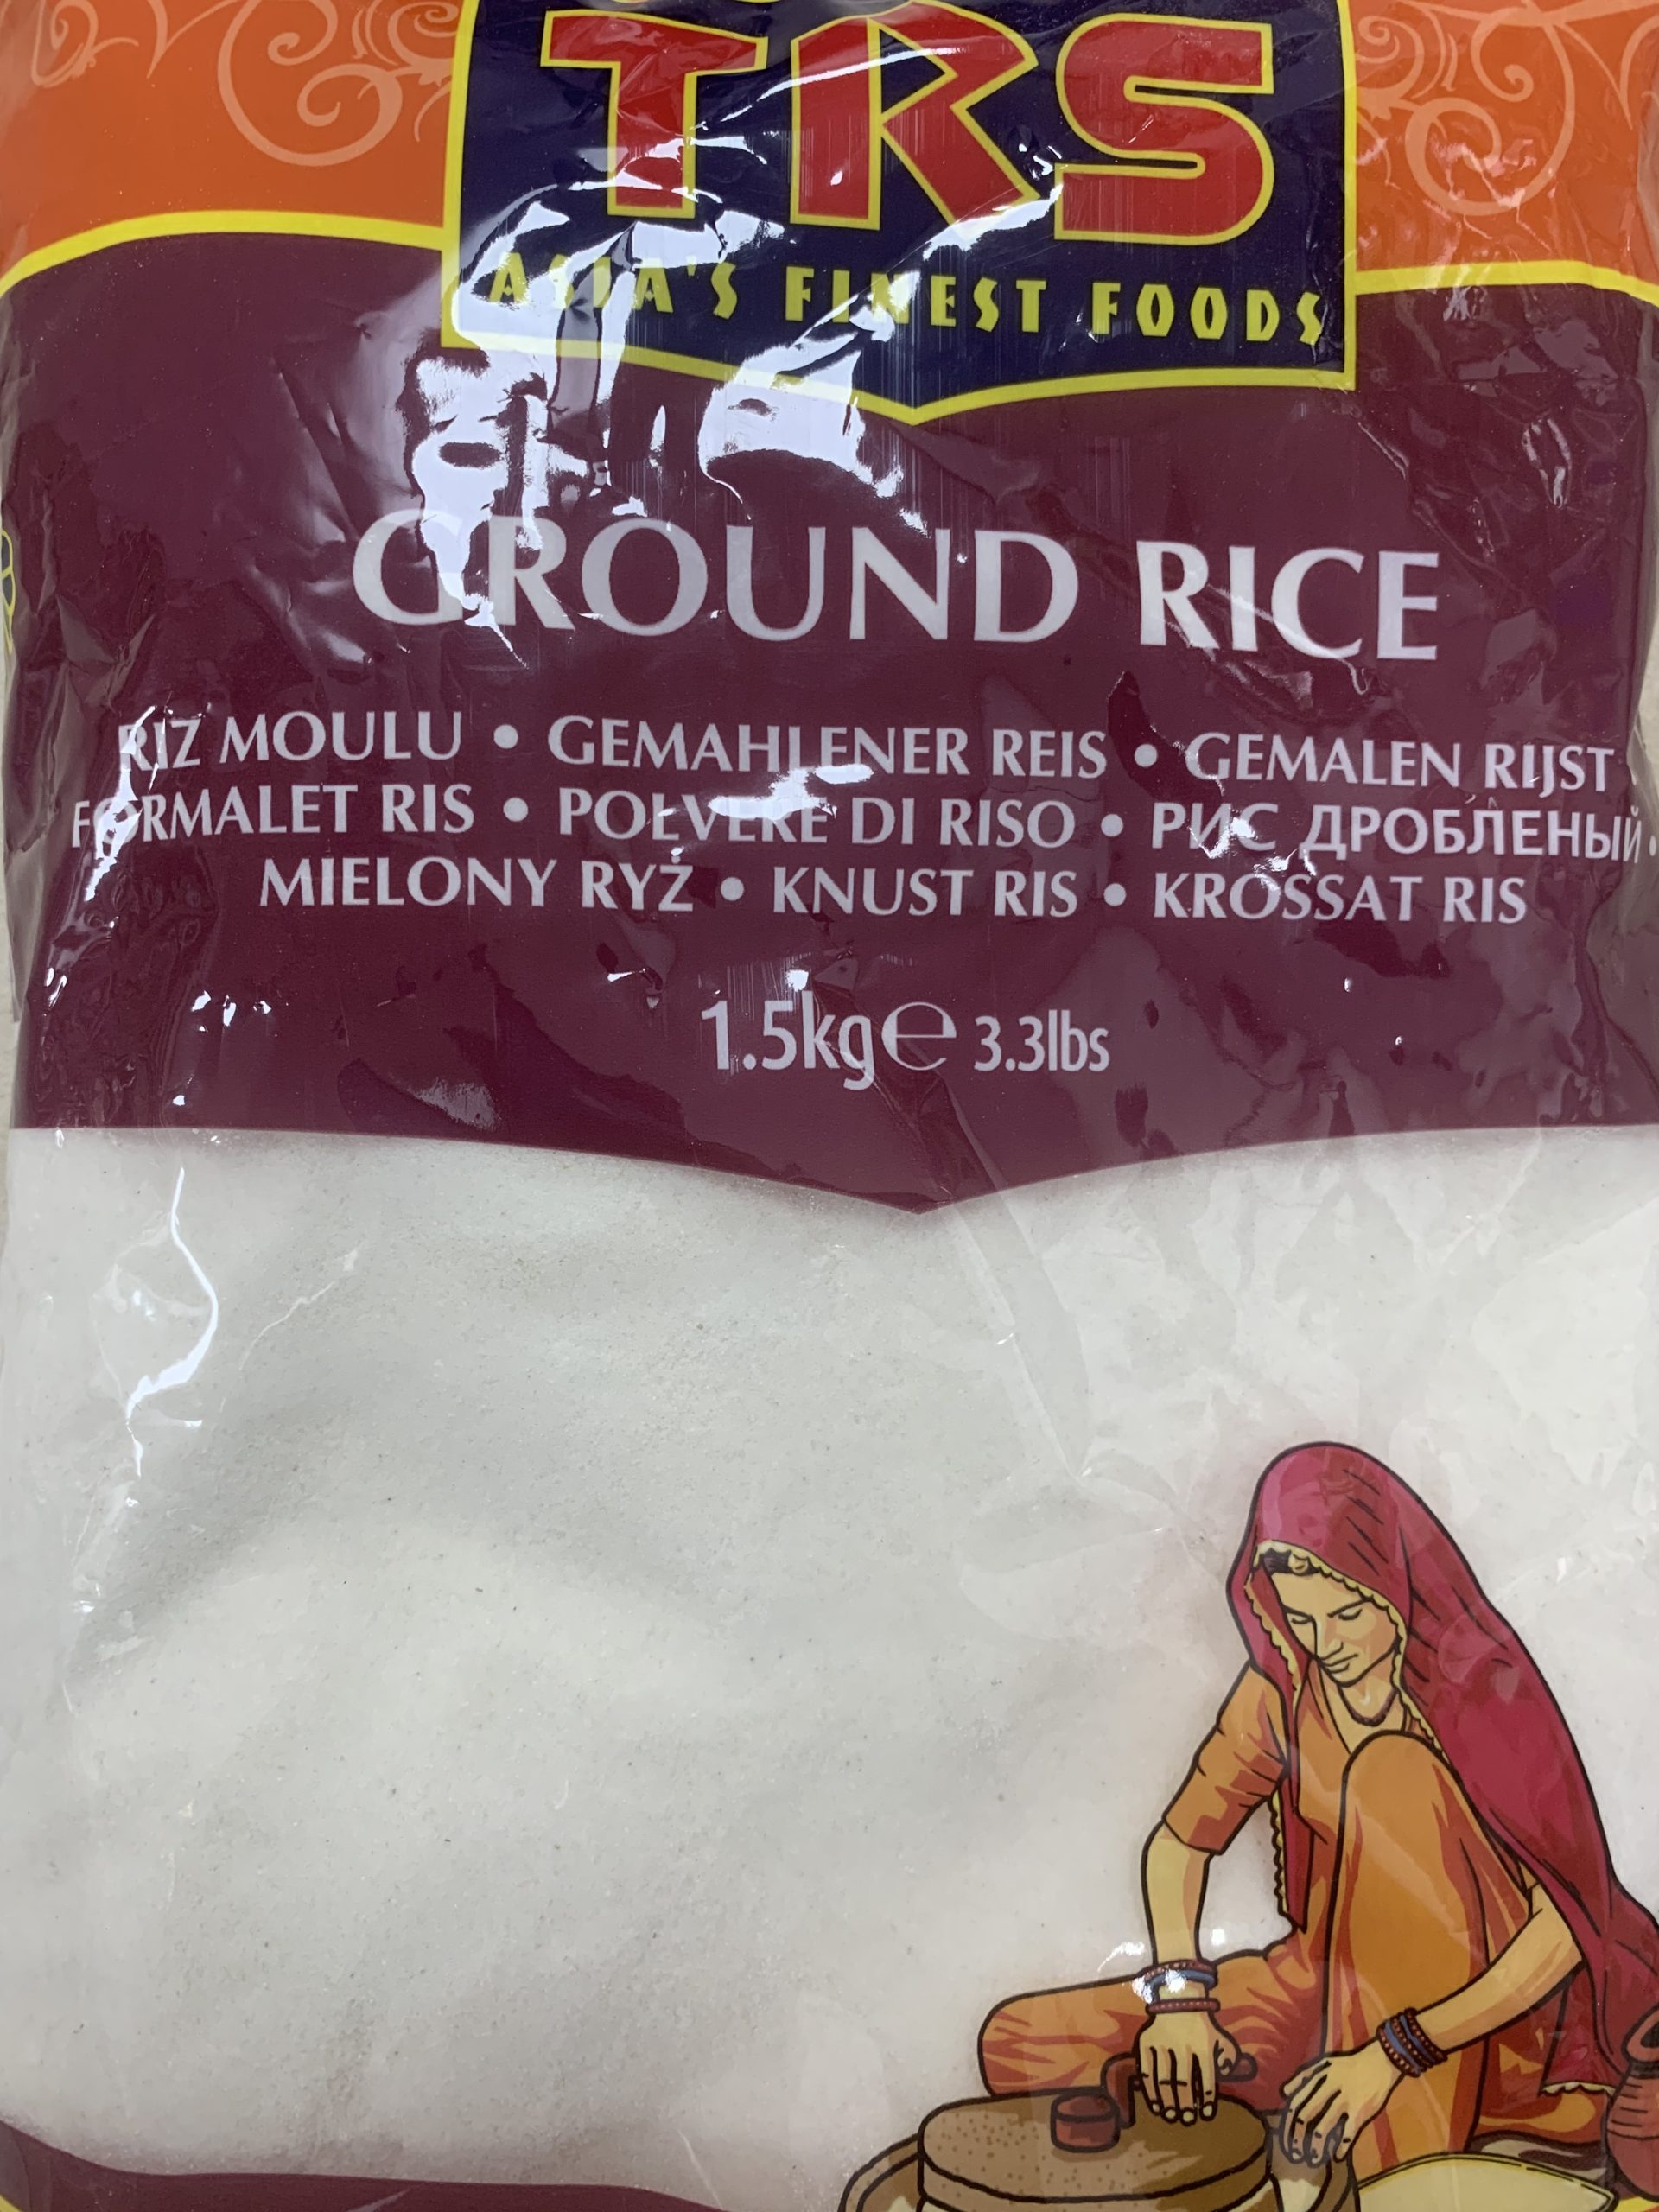 TRS Ground Rice 1.5kg